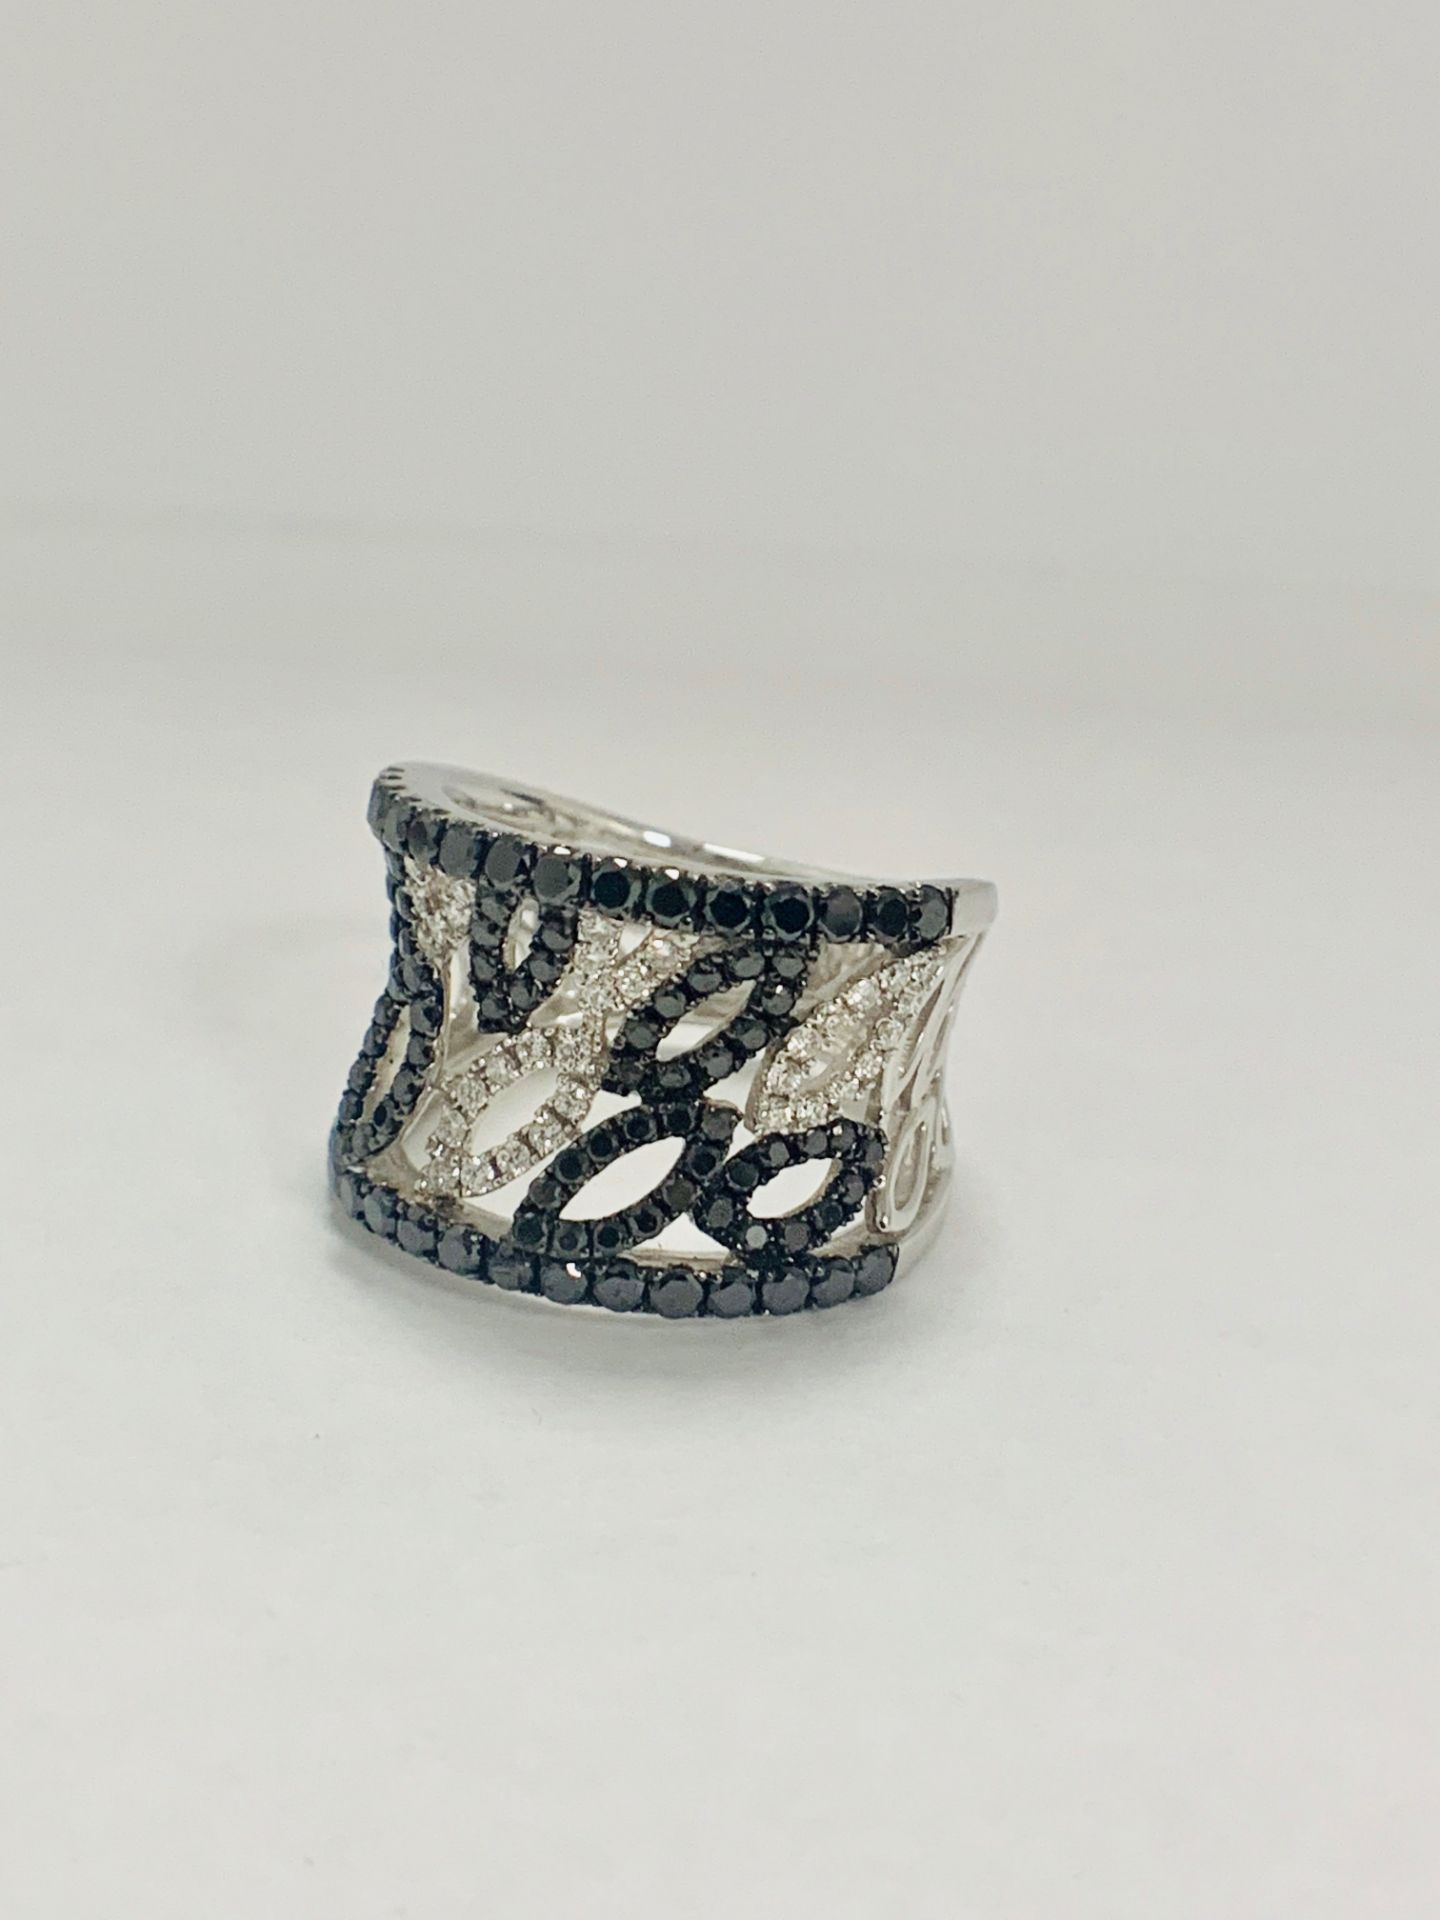 18ct White Gold Diamond Ring featuring 90 Round Cut, Black Diamonds (1.14ct TBDW) - Image 4 of 15